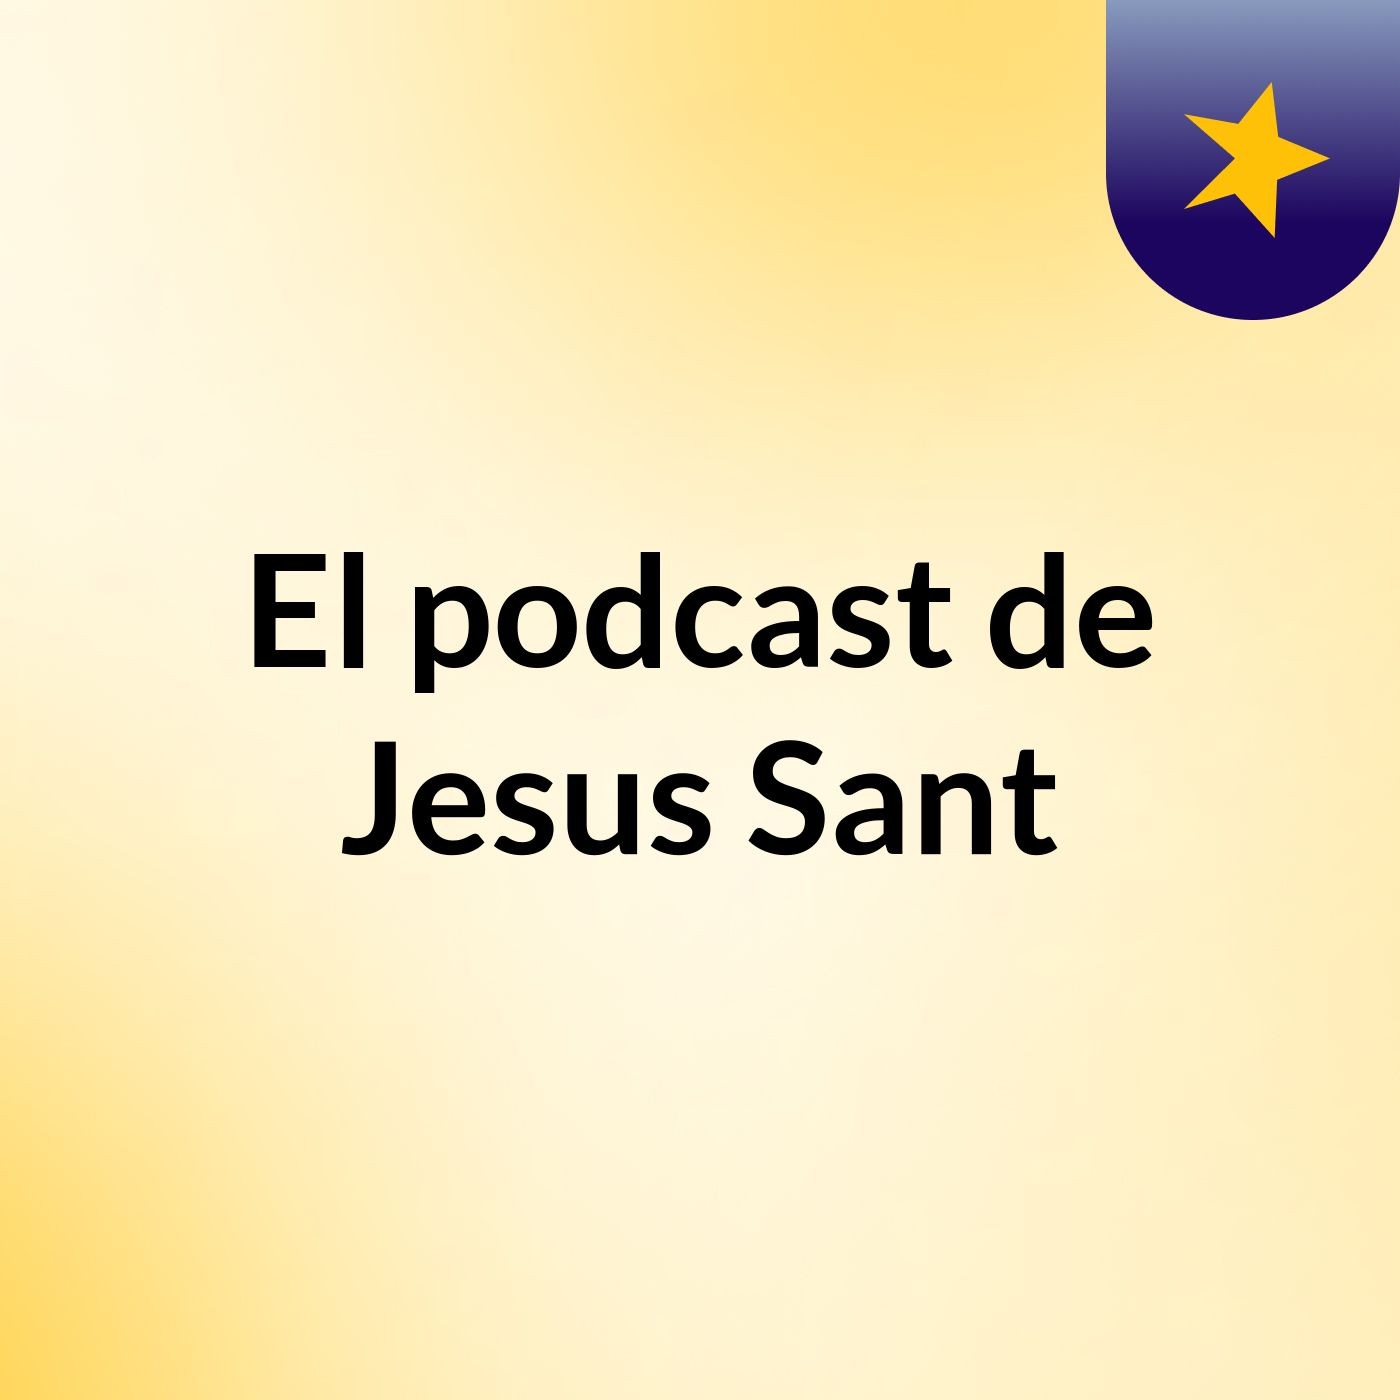 Episodio 4 - El podcast de Jesus Sant